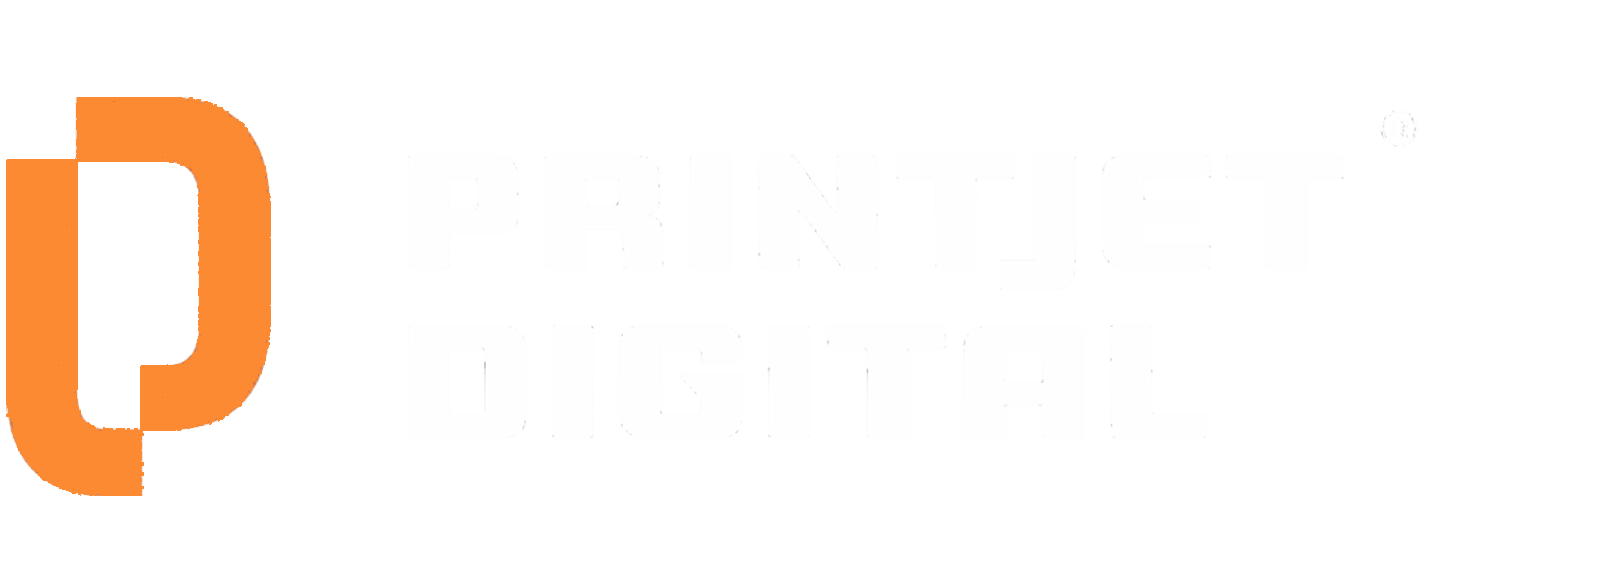 PrintJet Digital